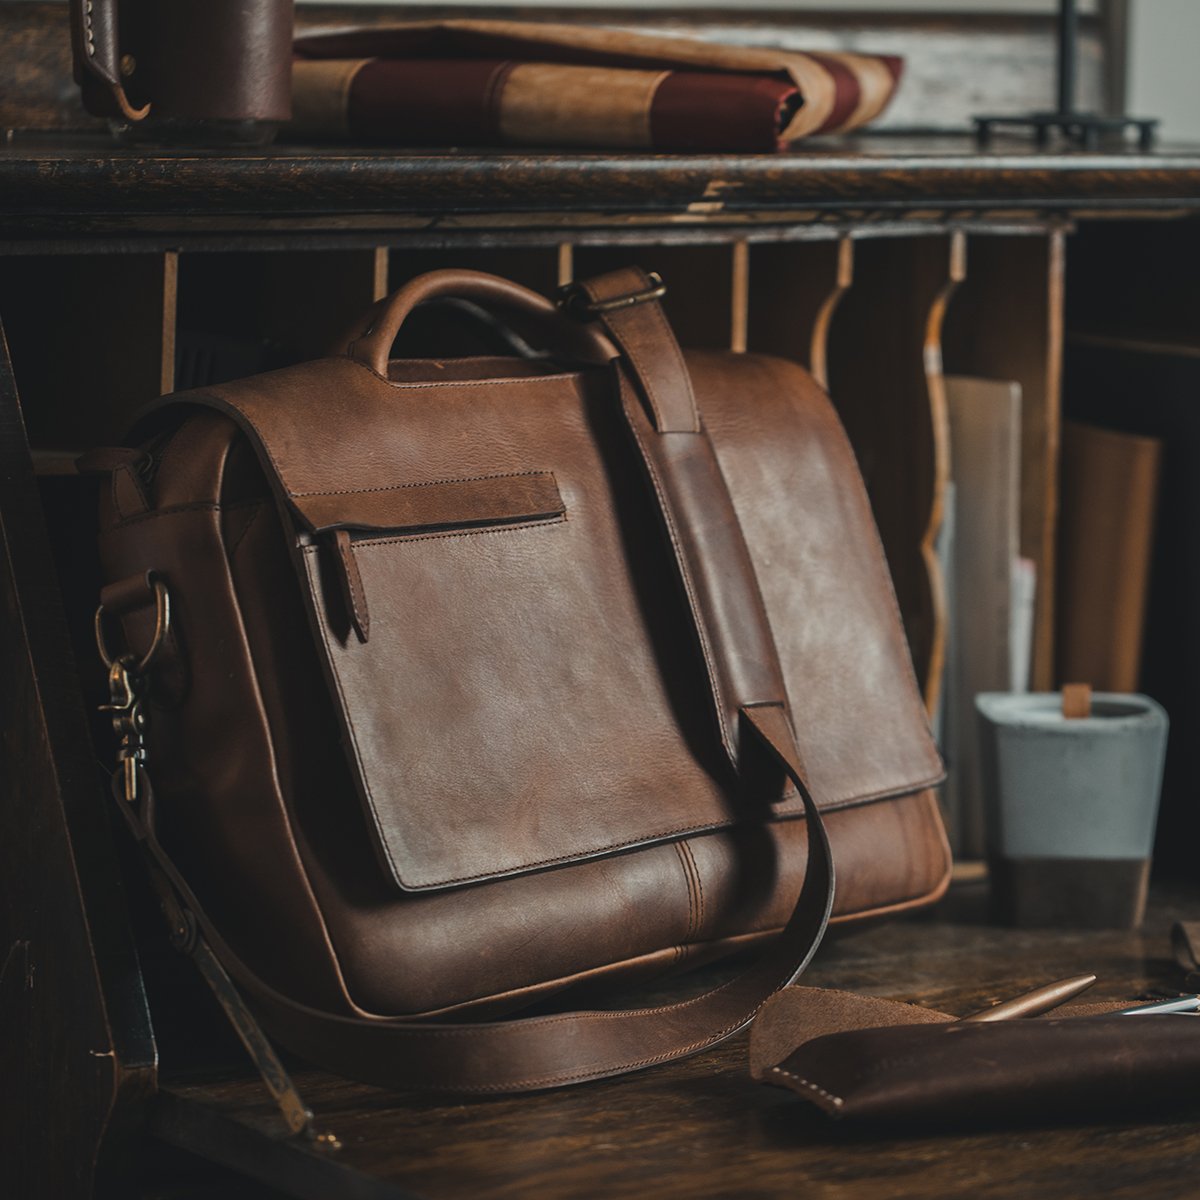 Full Grain Leather Duffle Bag | Vintage Leather Duffle Bag by Rustico - Cognac